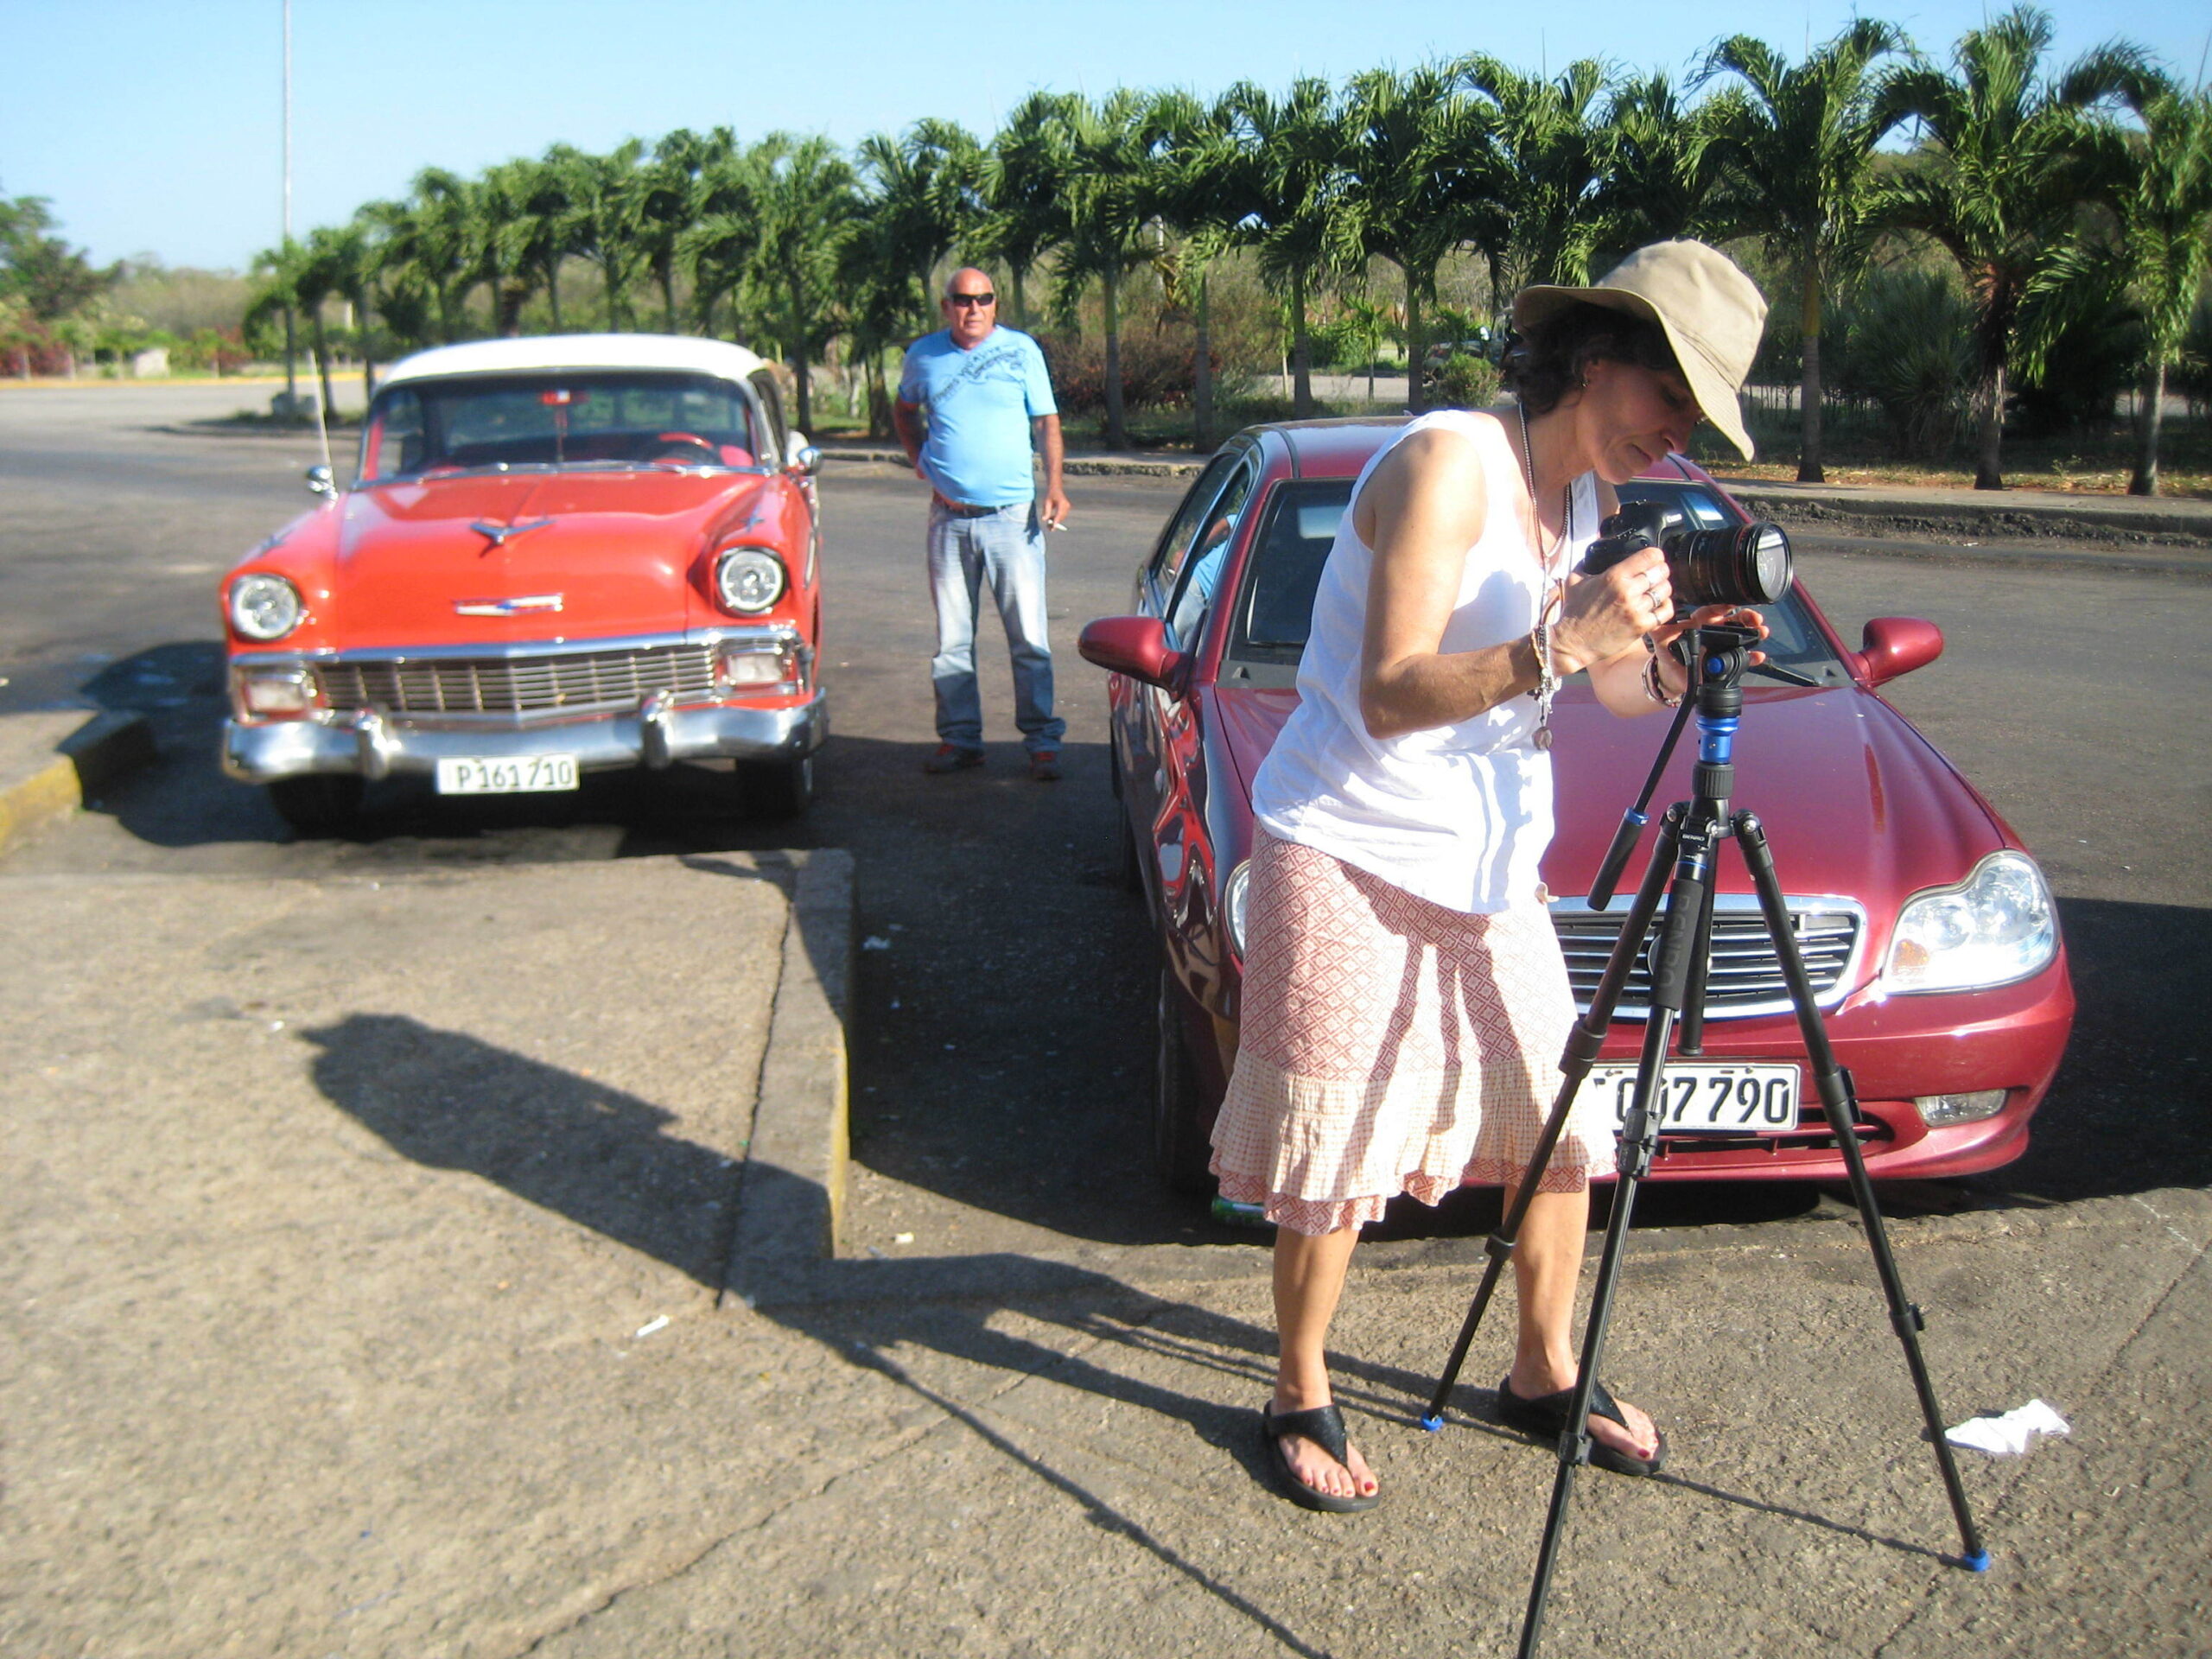 Christiane Arbesu filmin on location in Cuba. COURTESY THE ARTIST